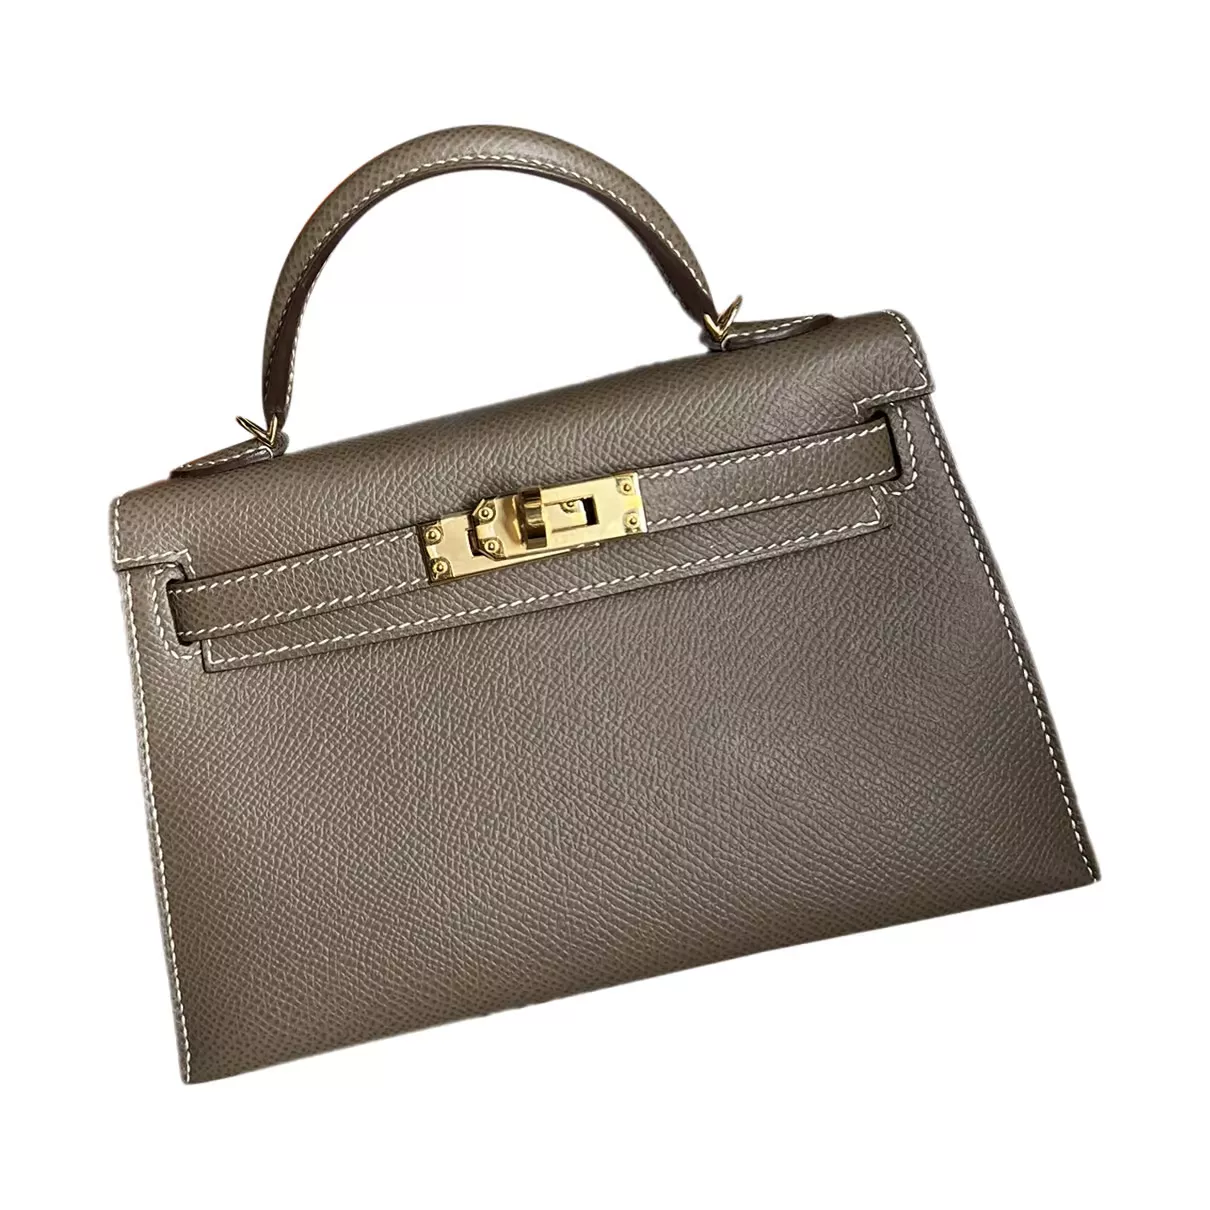 Essential faux-leather backpack, Hermès Kelly Handbag 383317